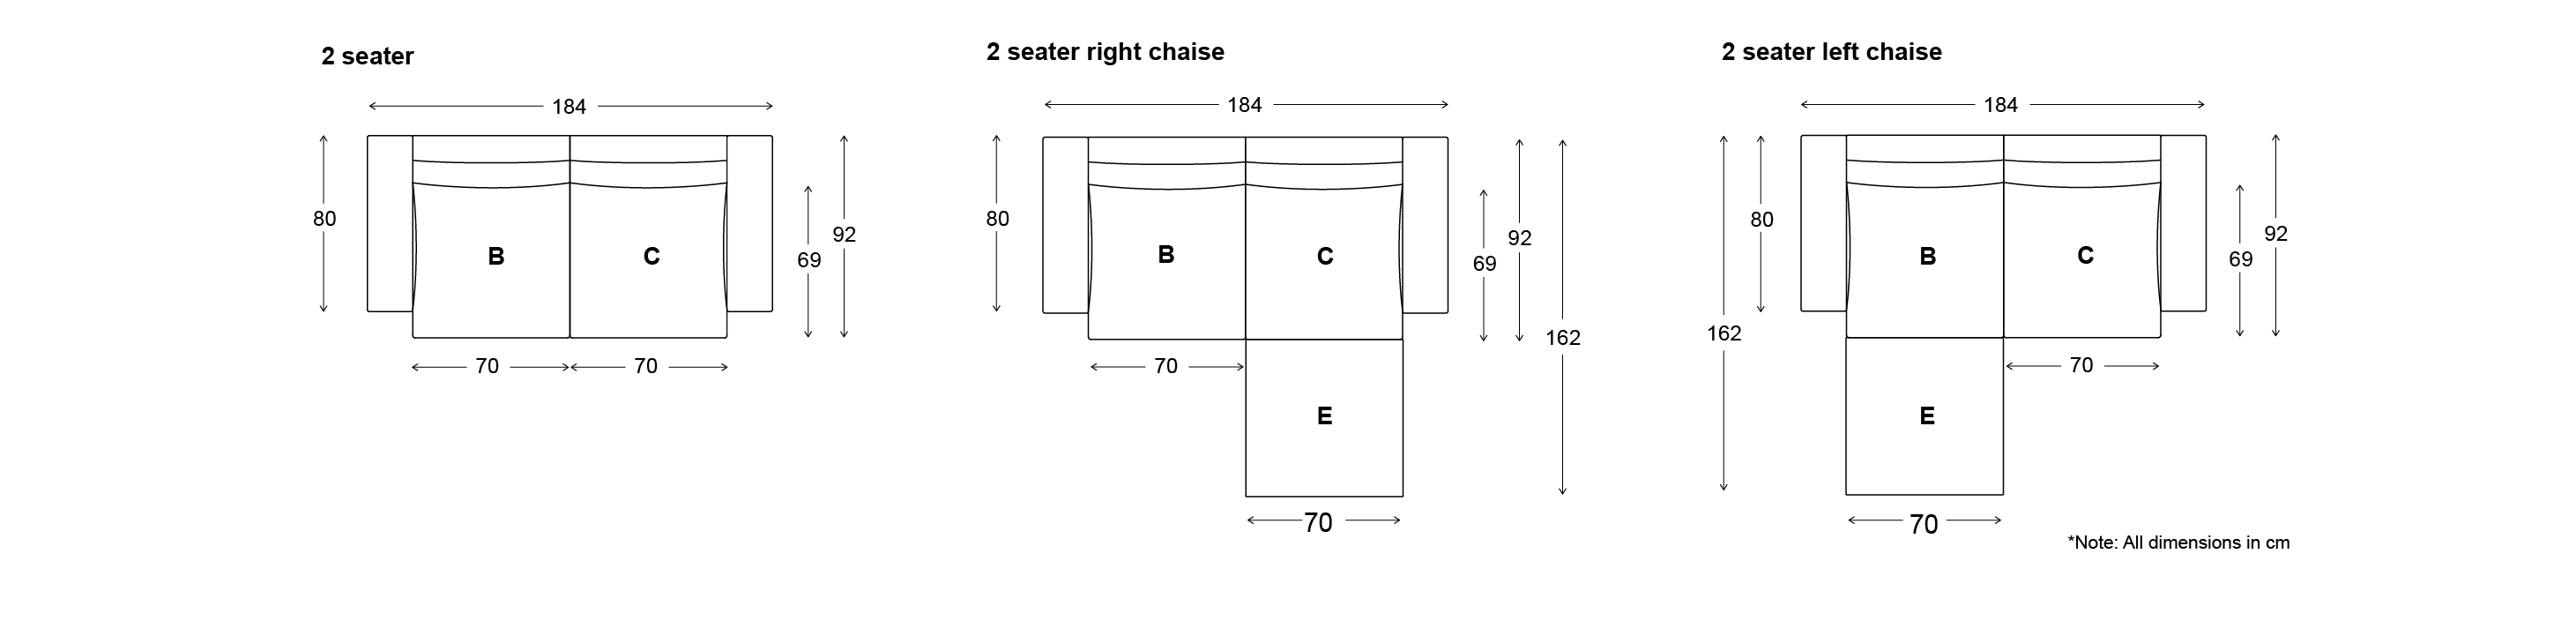 modular sofa 3 seater dimensions 